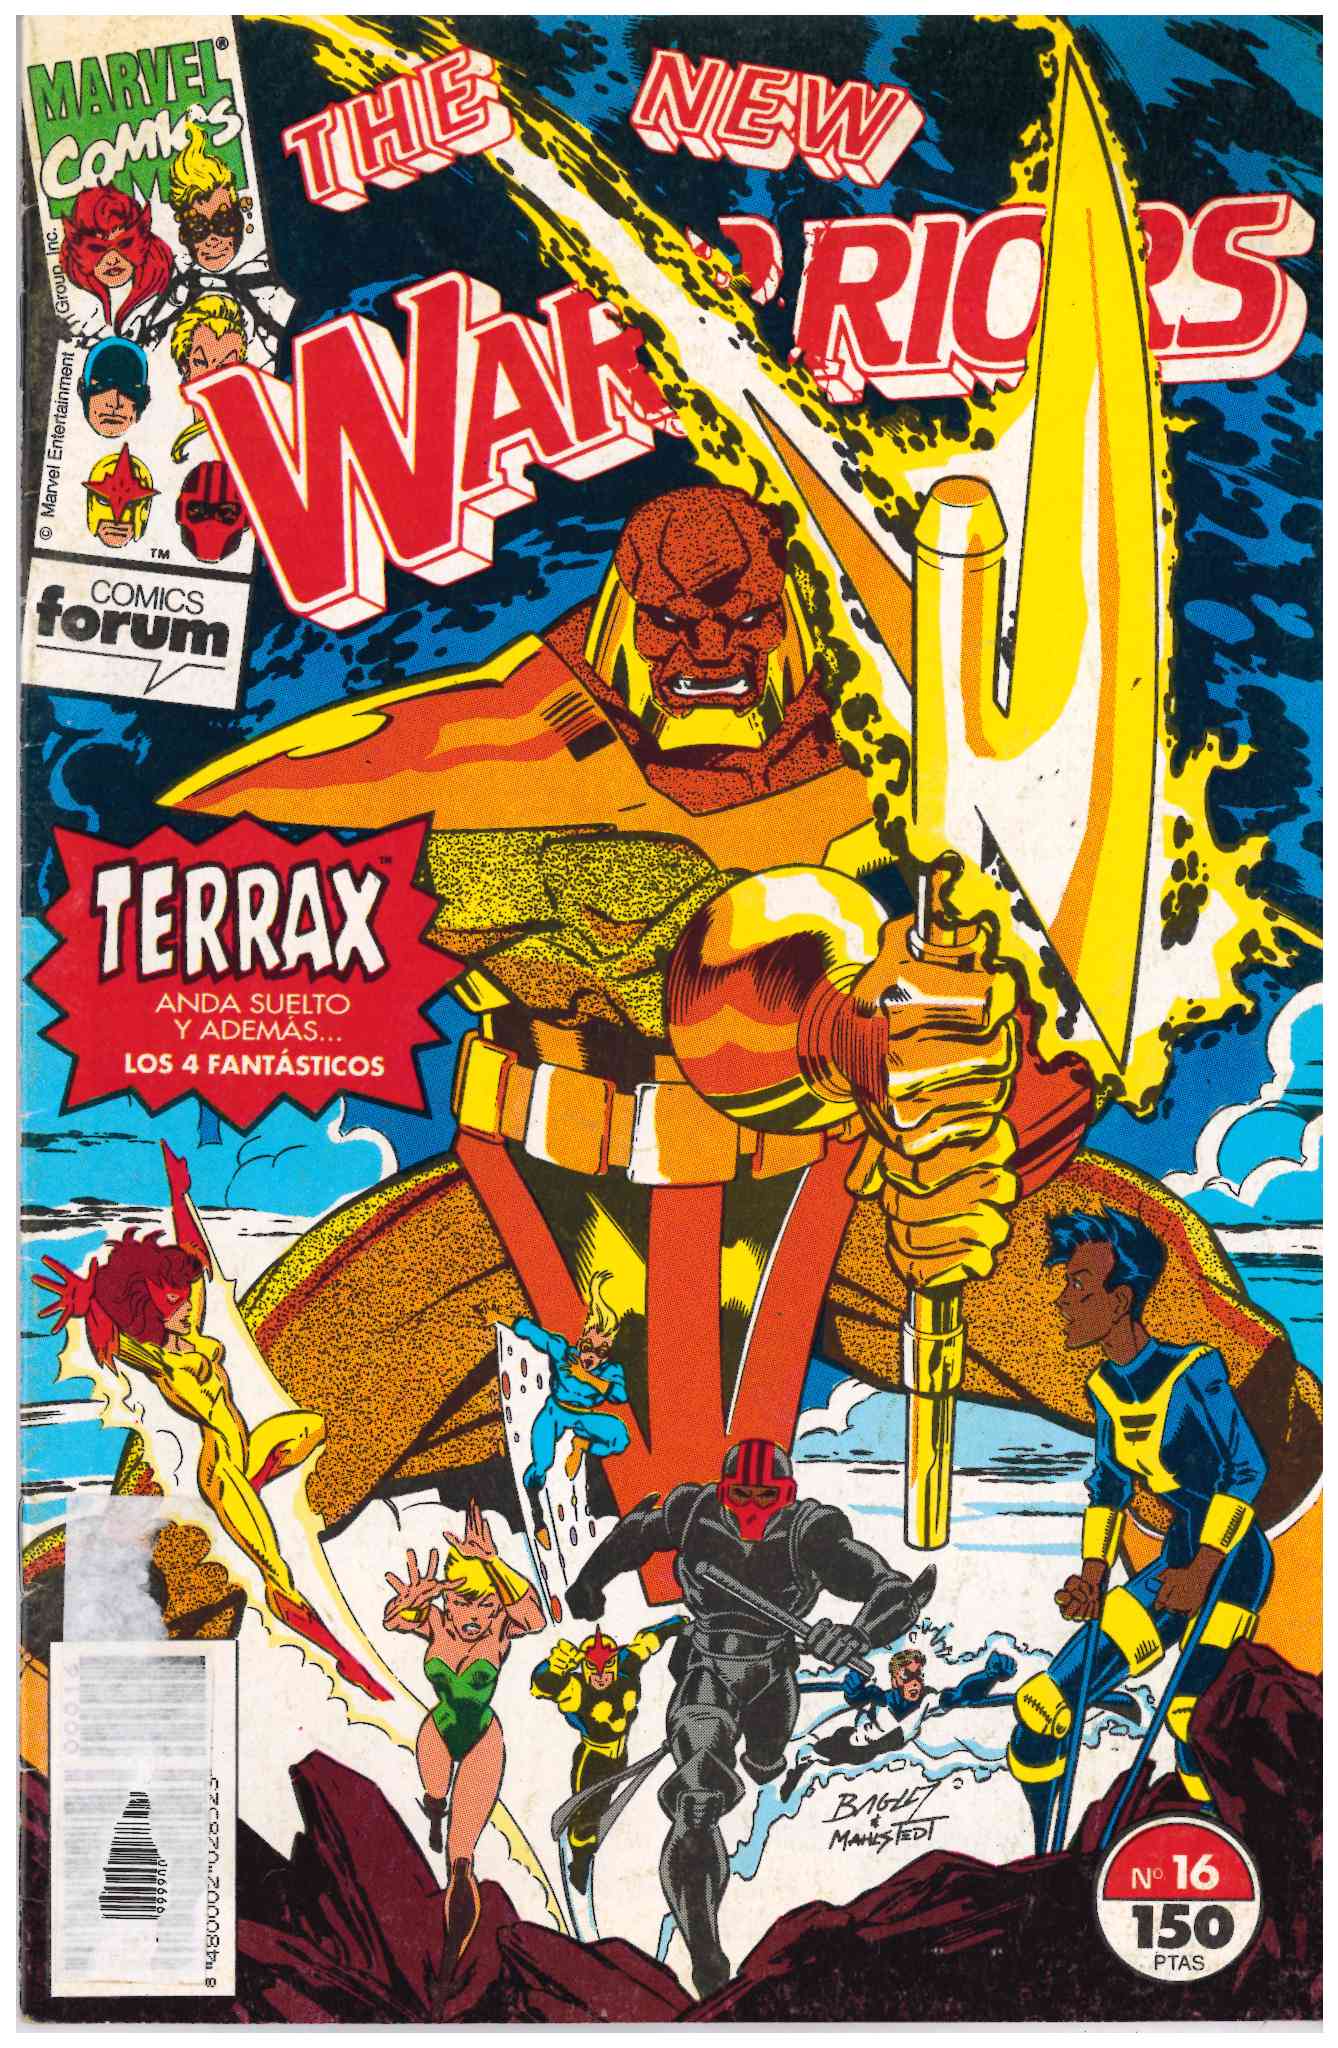 The New Warriors. Forum 1991. Nº 16